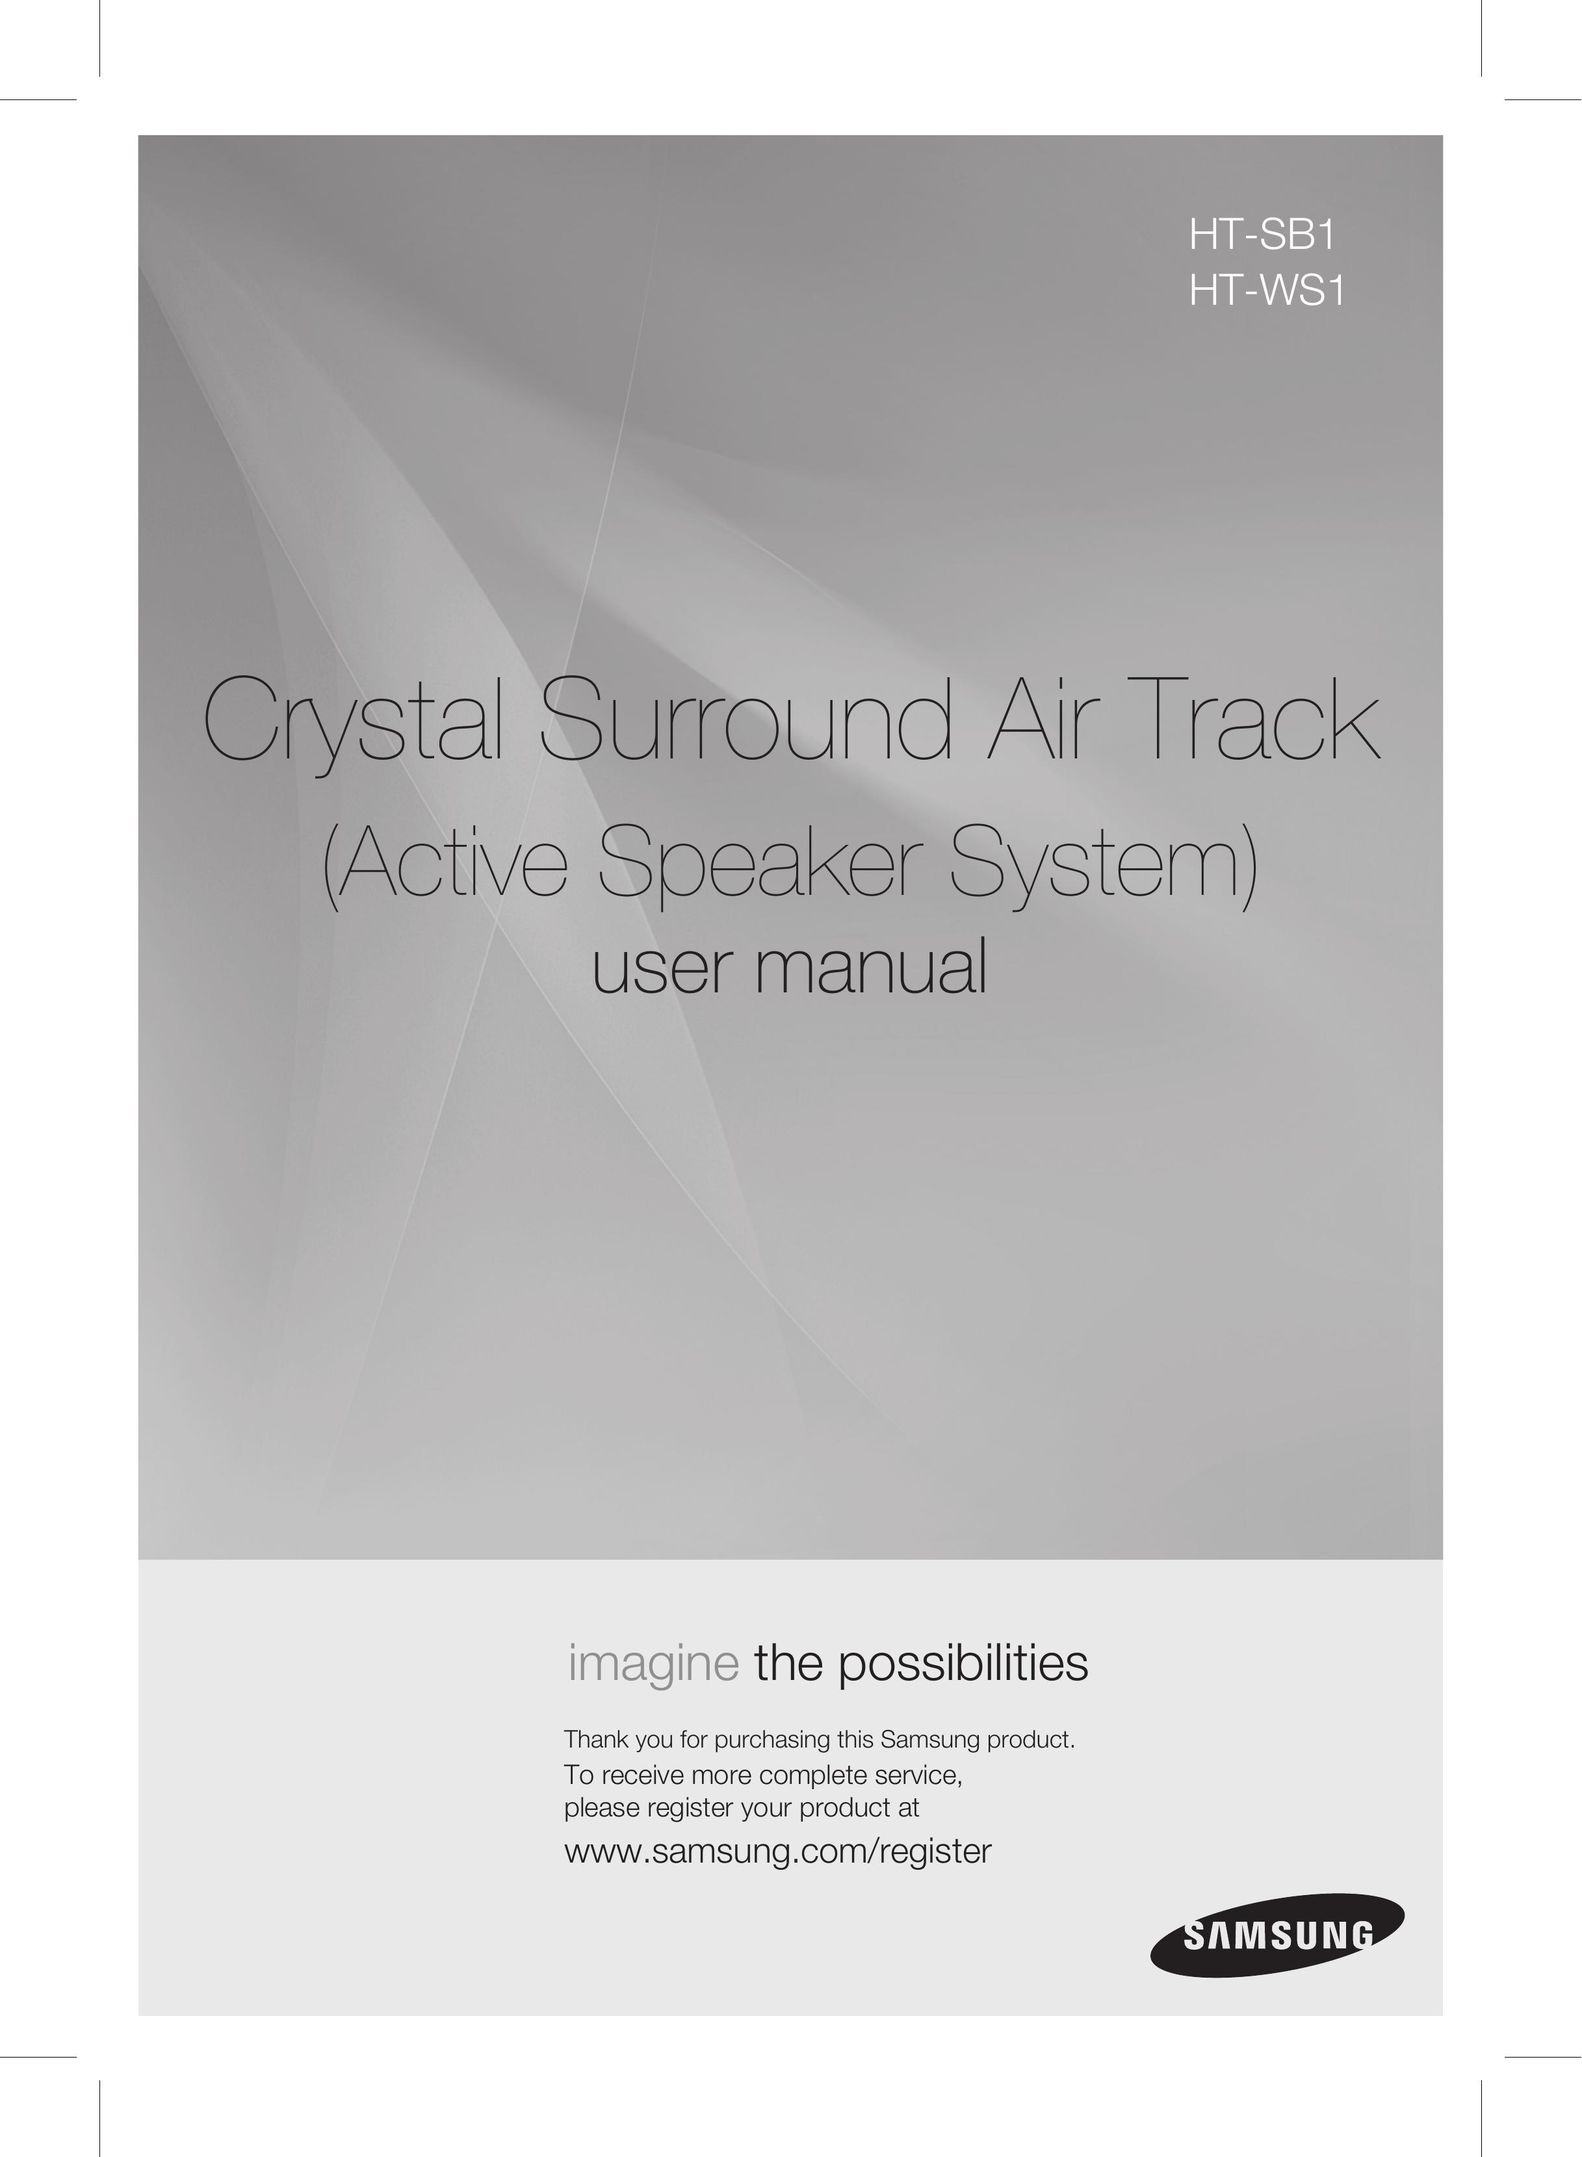 Samsung HT-SB1 Speaker System User Manual